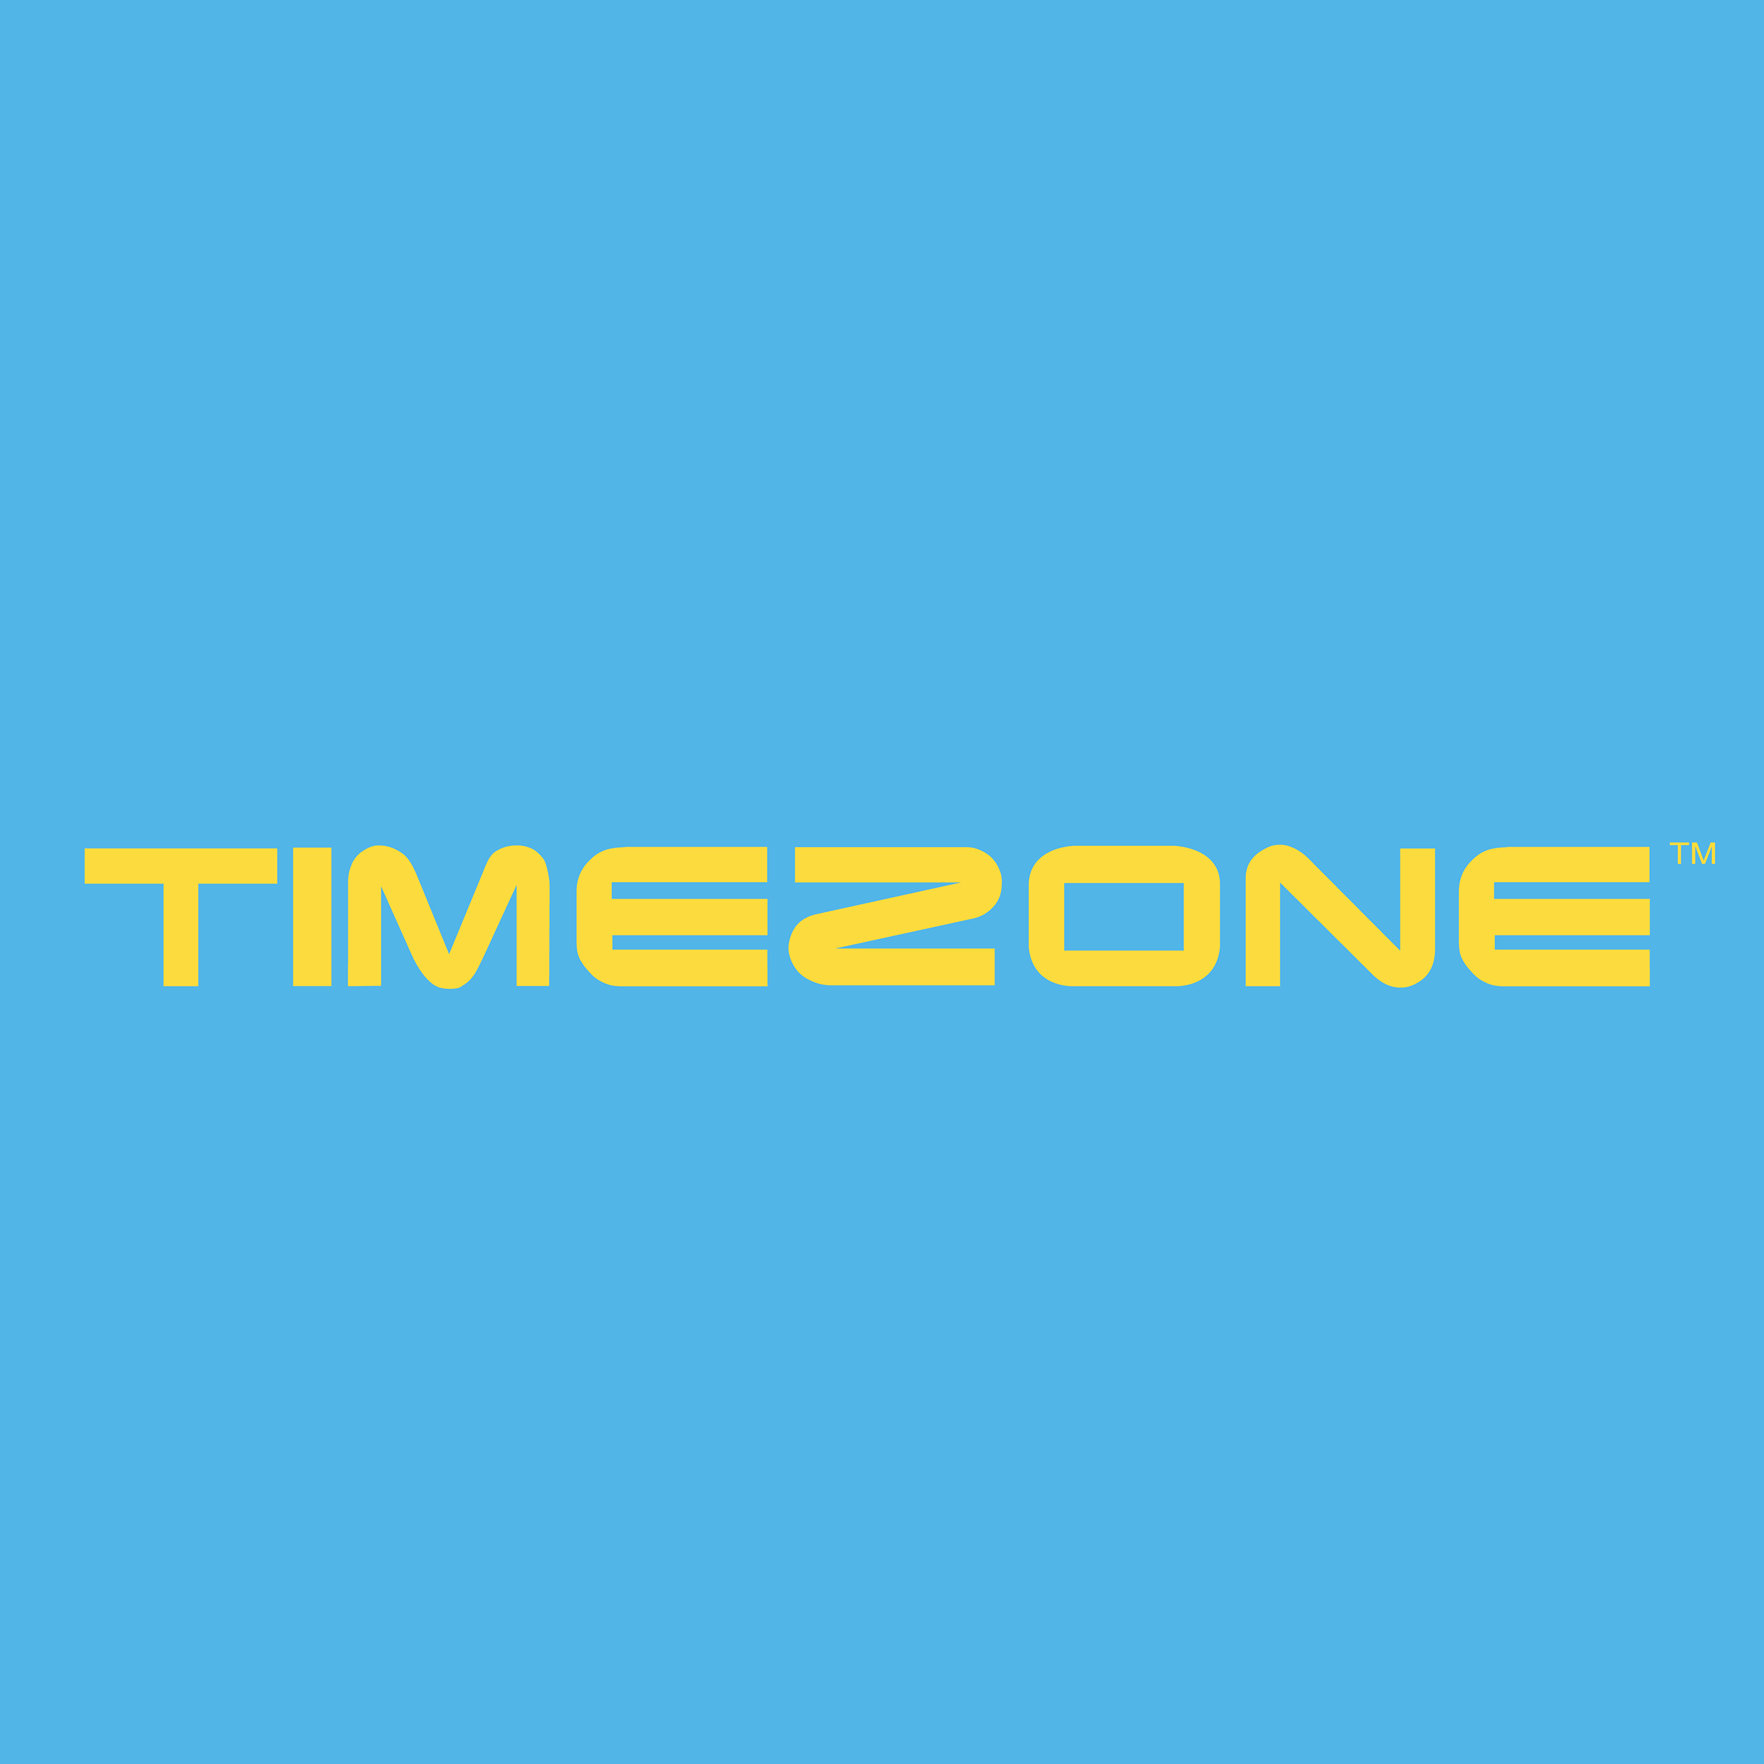 Timezone (Westgate) - Dine, Shop, Earn